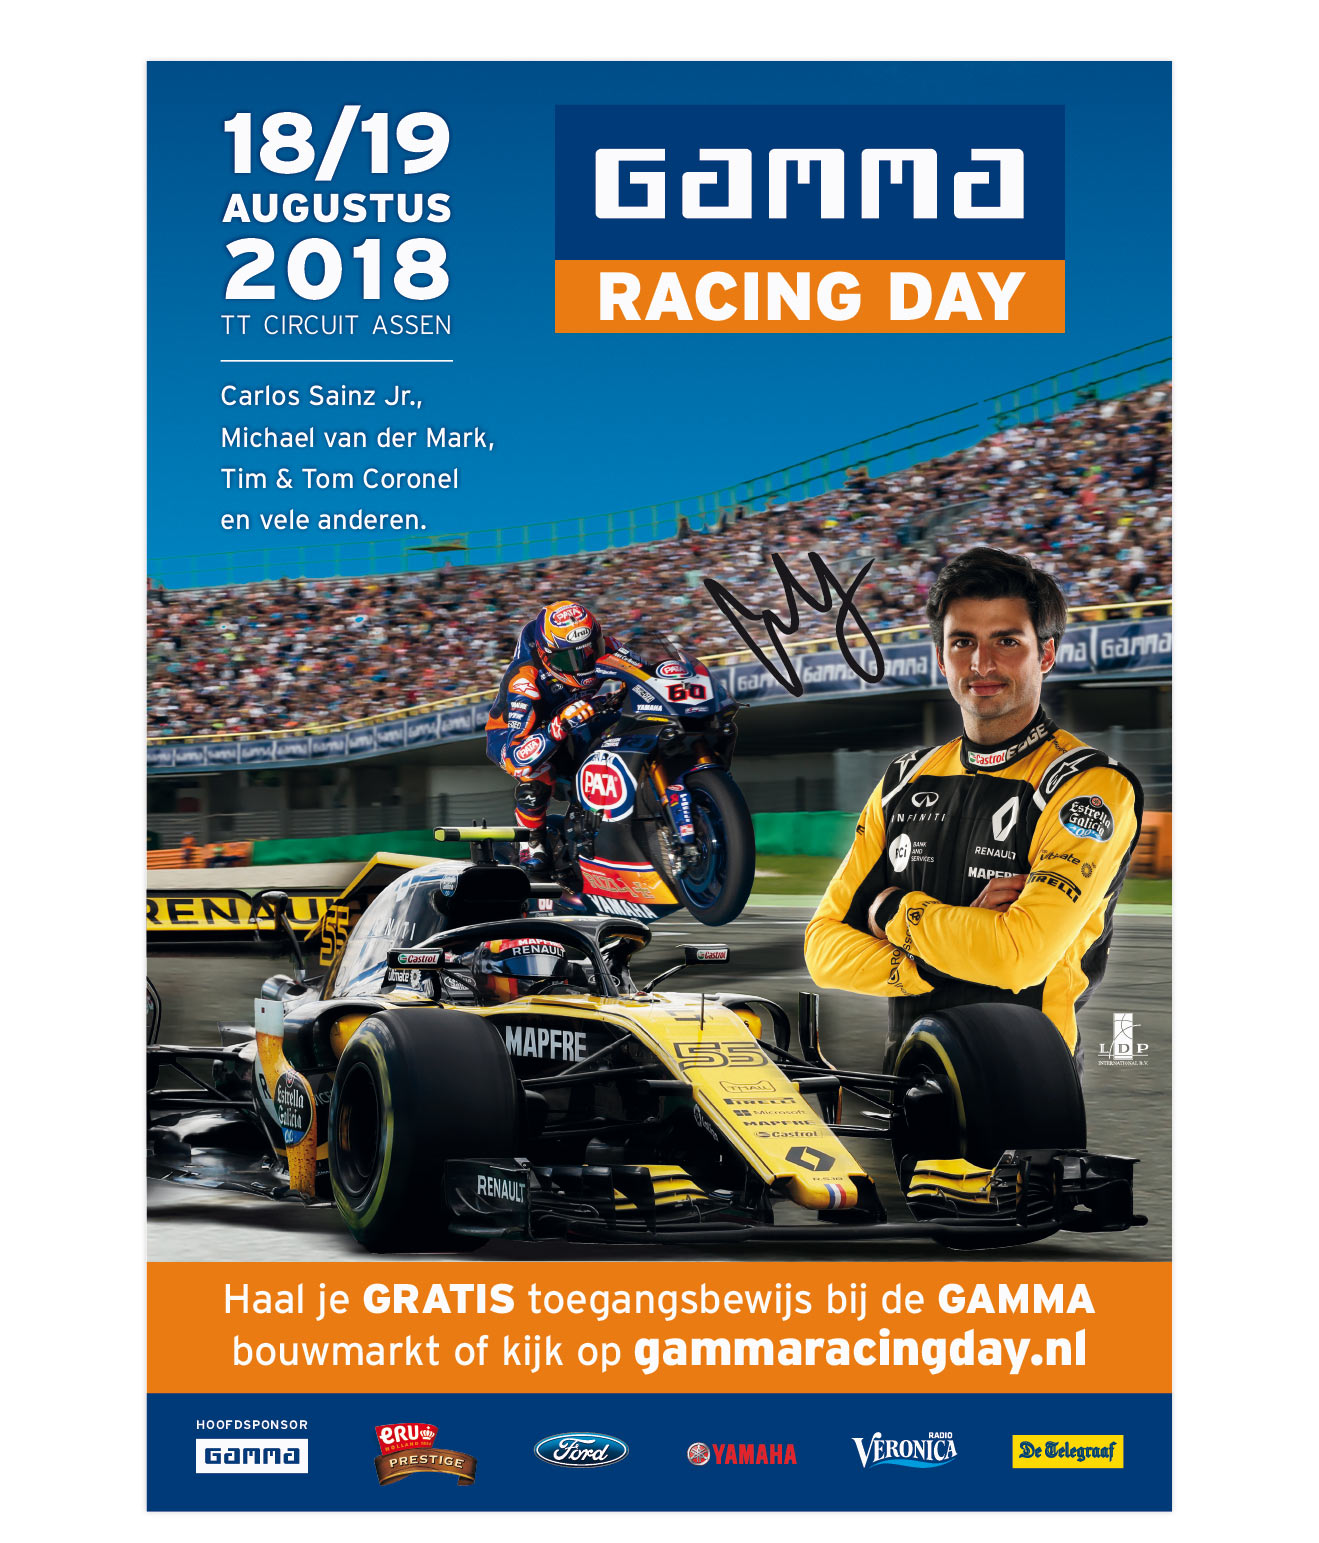 Gamma Racing Day - TT Circuit Assen